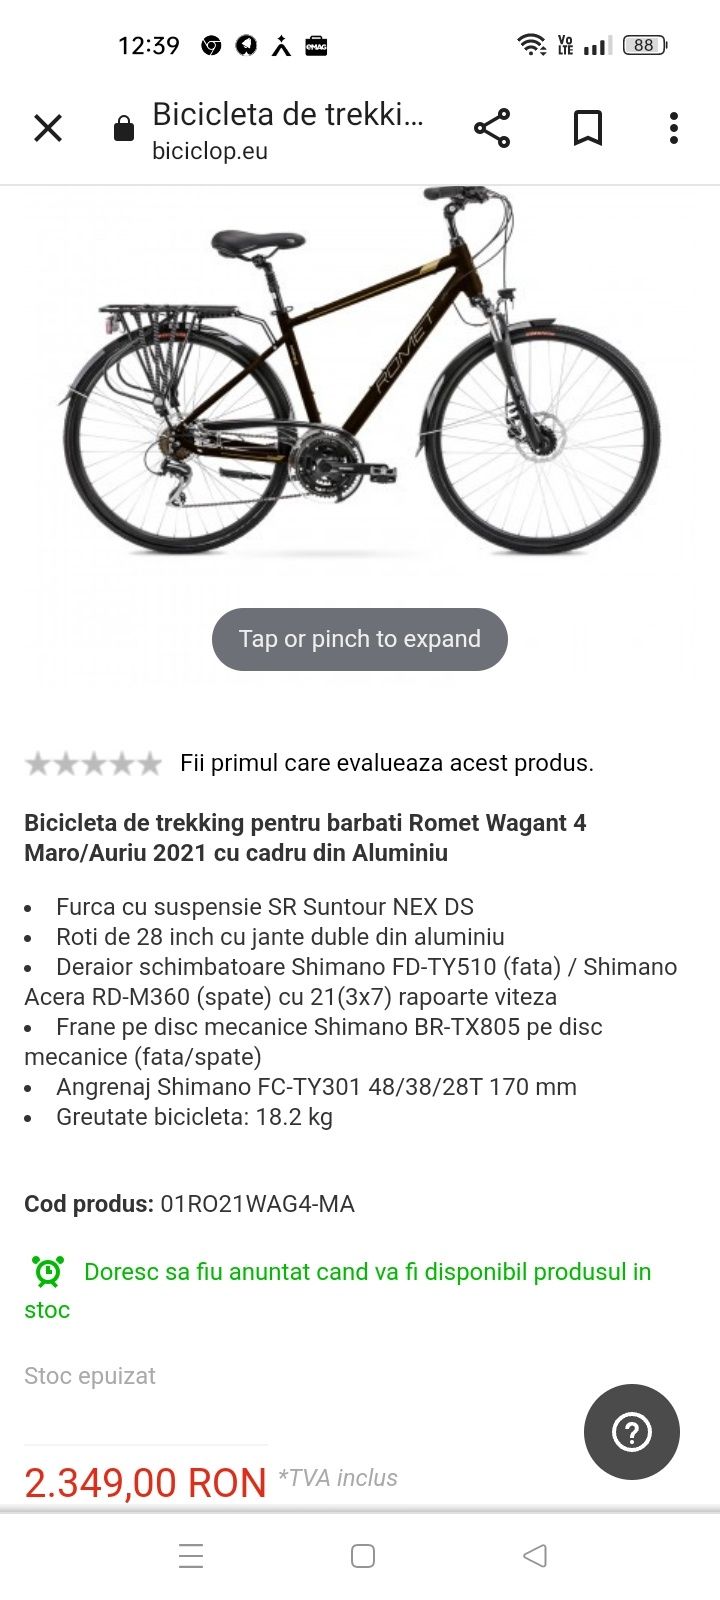 Bicicleta pentru barbati Romet Wagant 4, noua , 50 km parcursi.